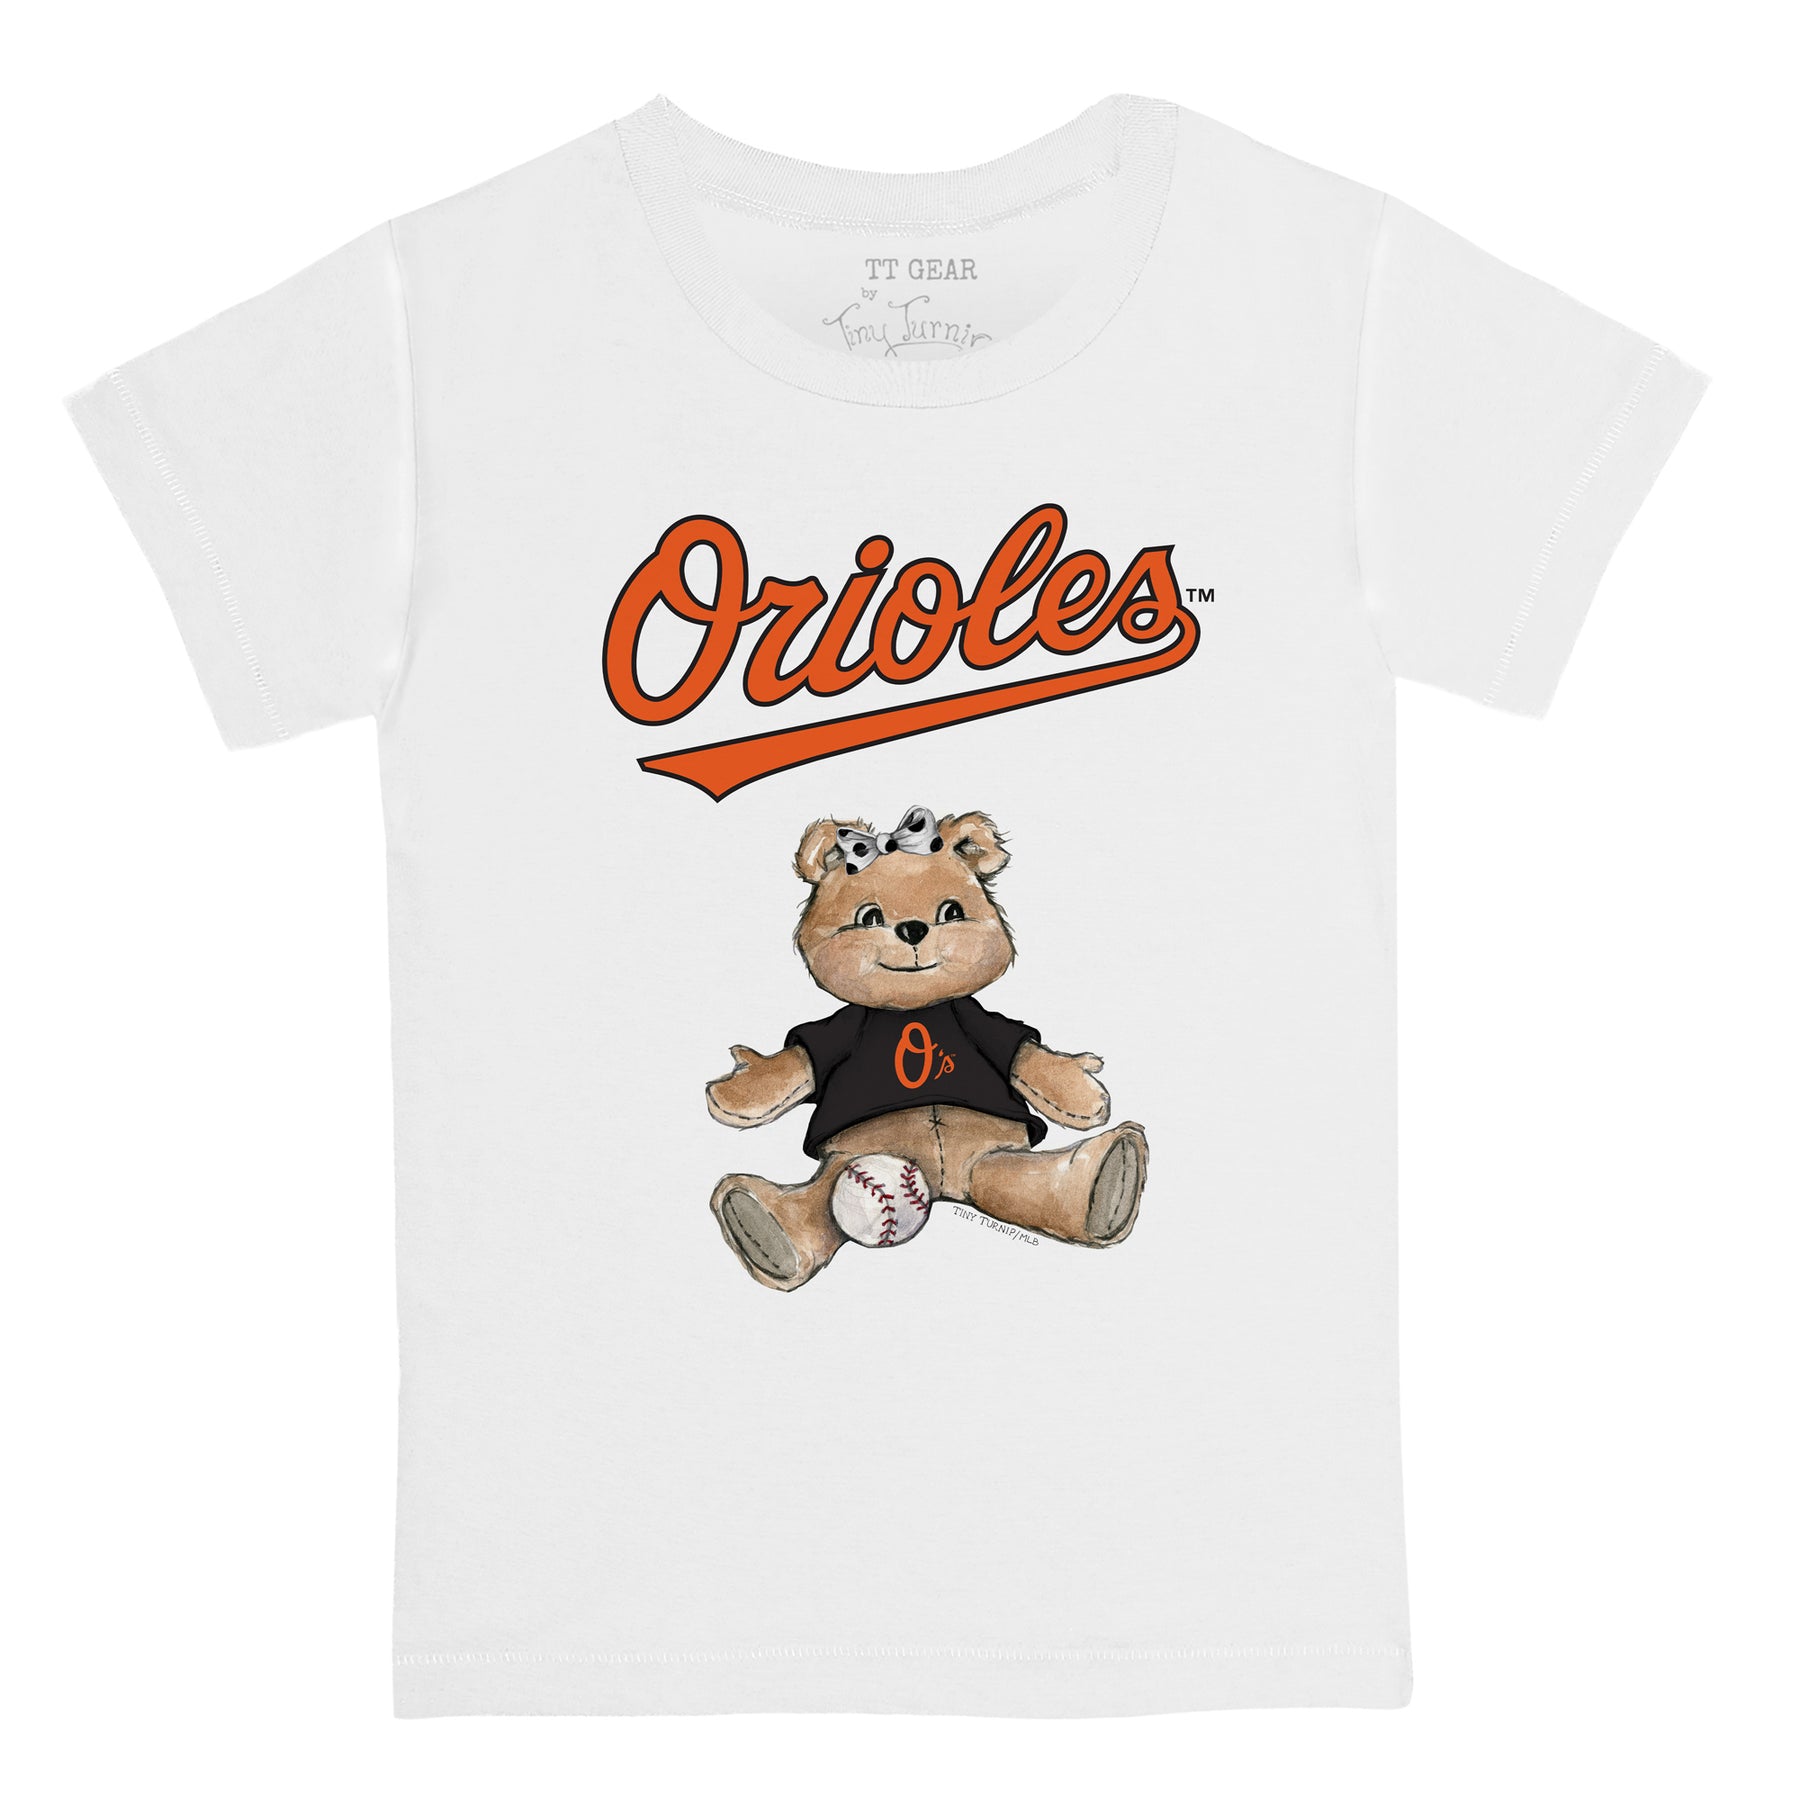 Toddler Tiny Turnip White Baltimore Orioles Team Slugger T-Shirt Size: 2T